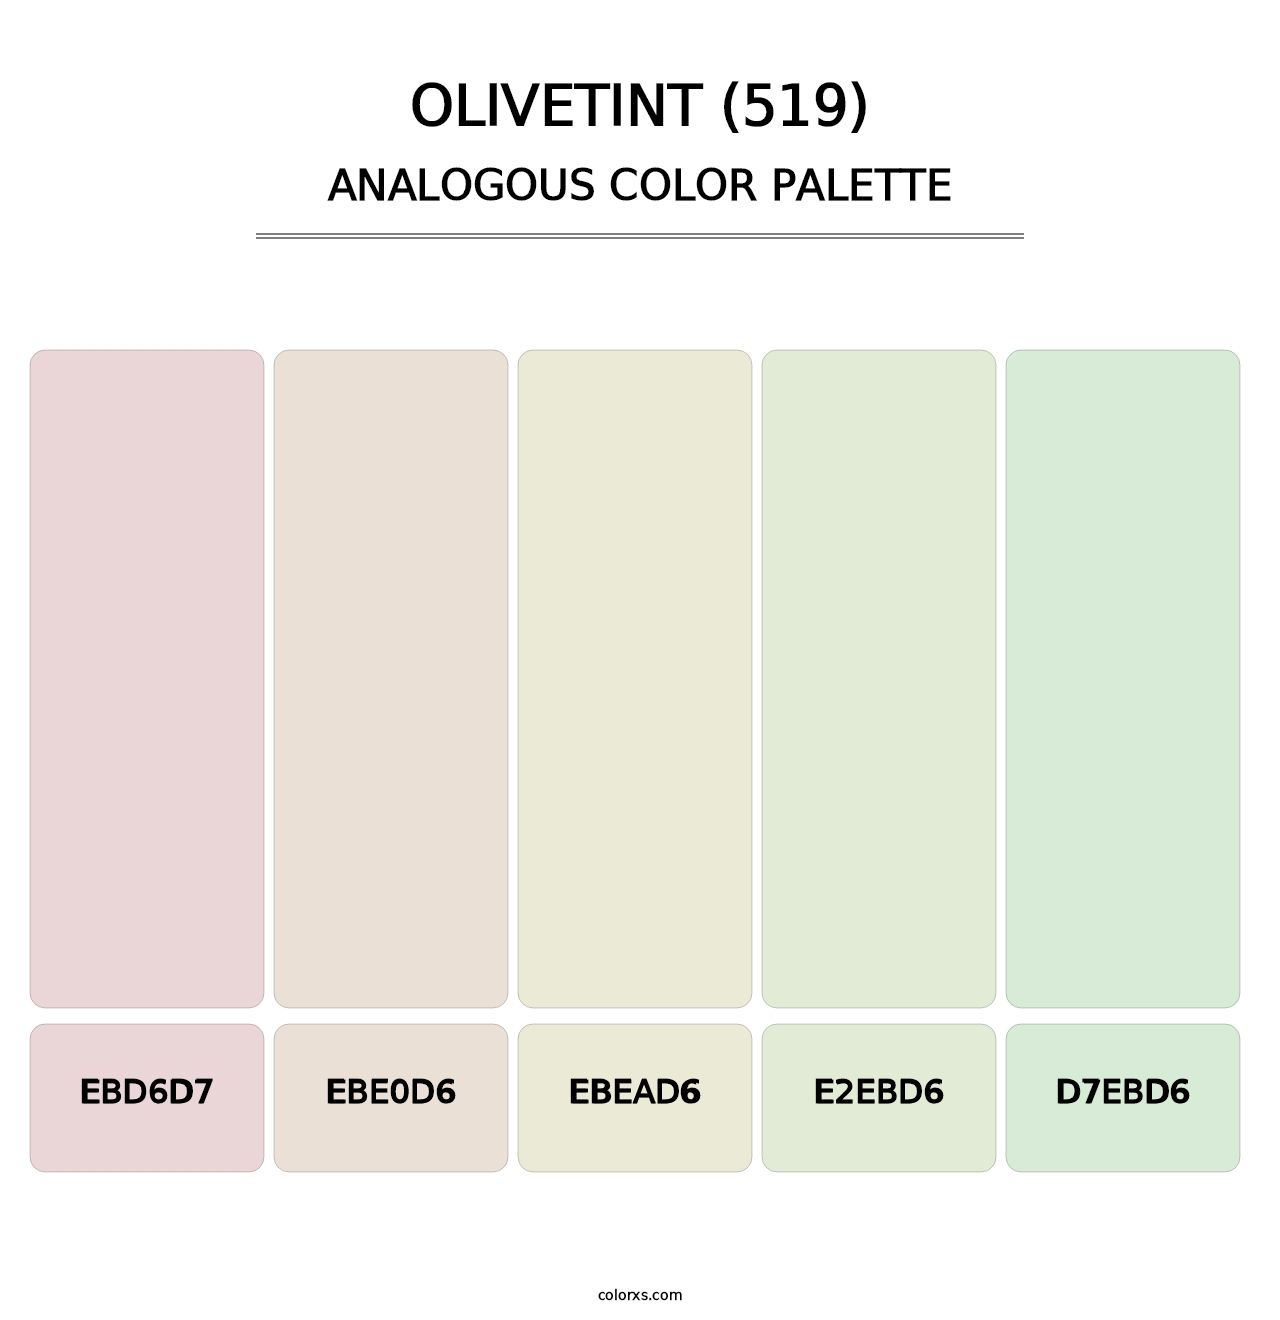 Olivetint (519) - Analogous Color Palette